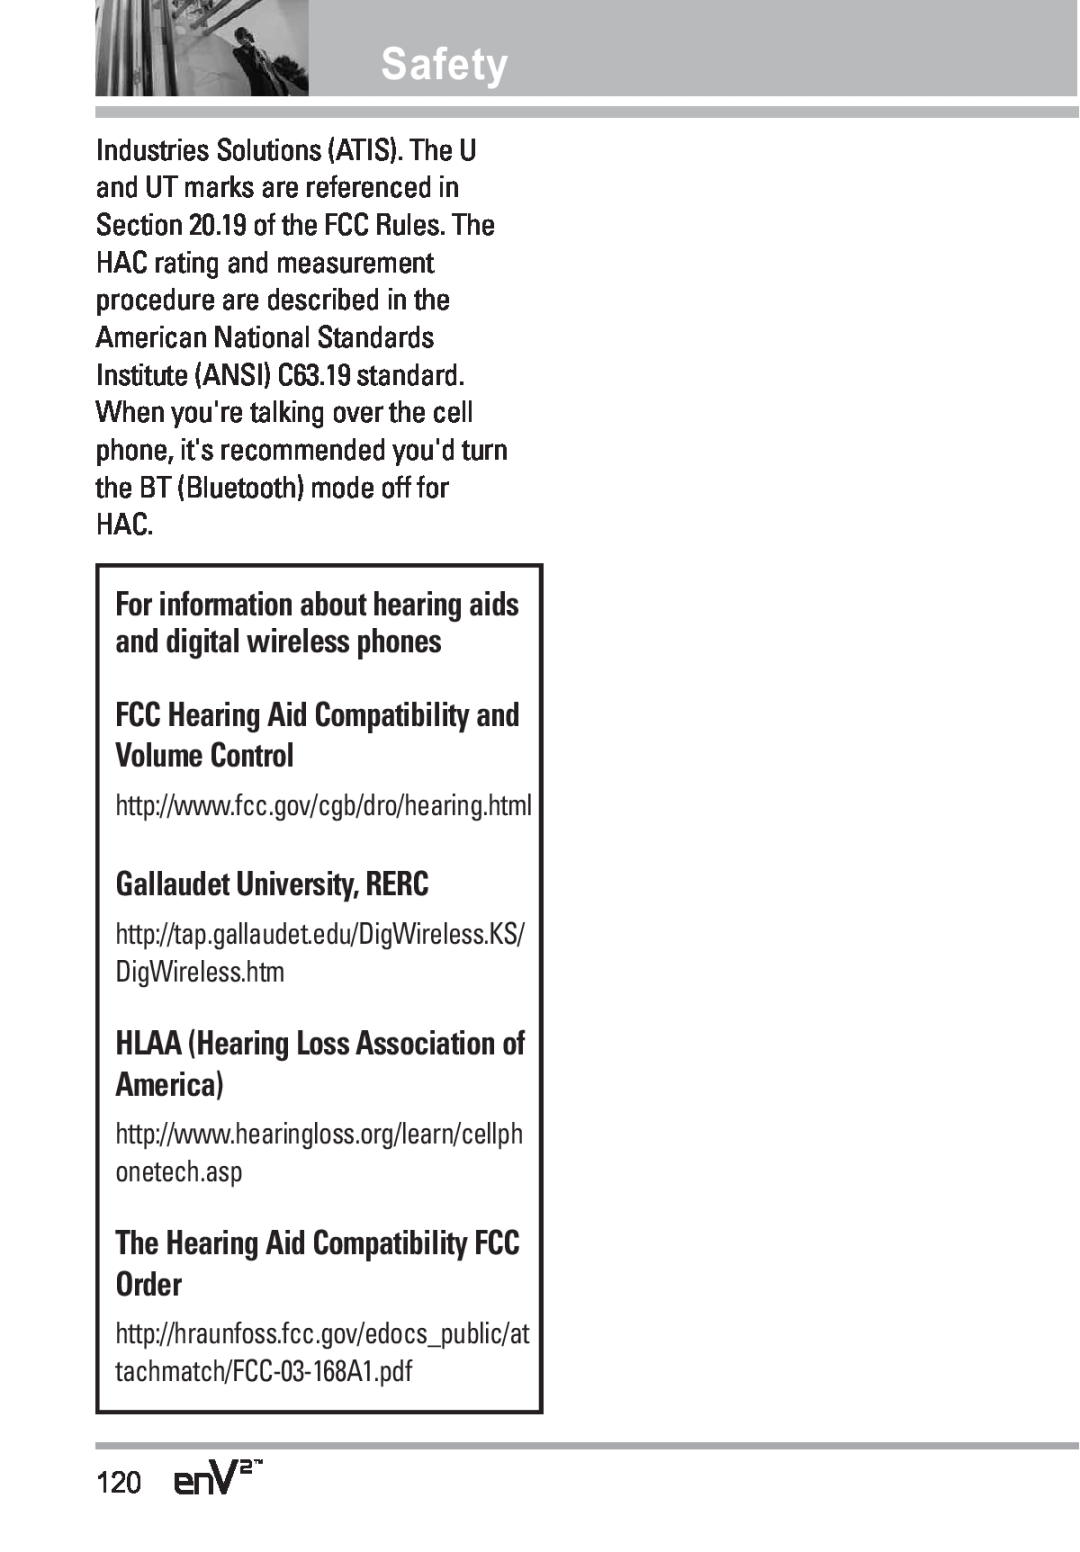 LG Electronics EnV2 manual Safety, Gallaudet University, RERC, HLAA Hearing Loss Association of America, onetech.asp 